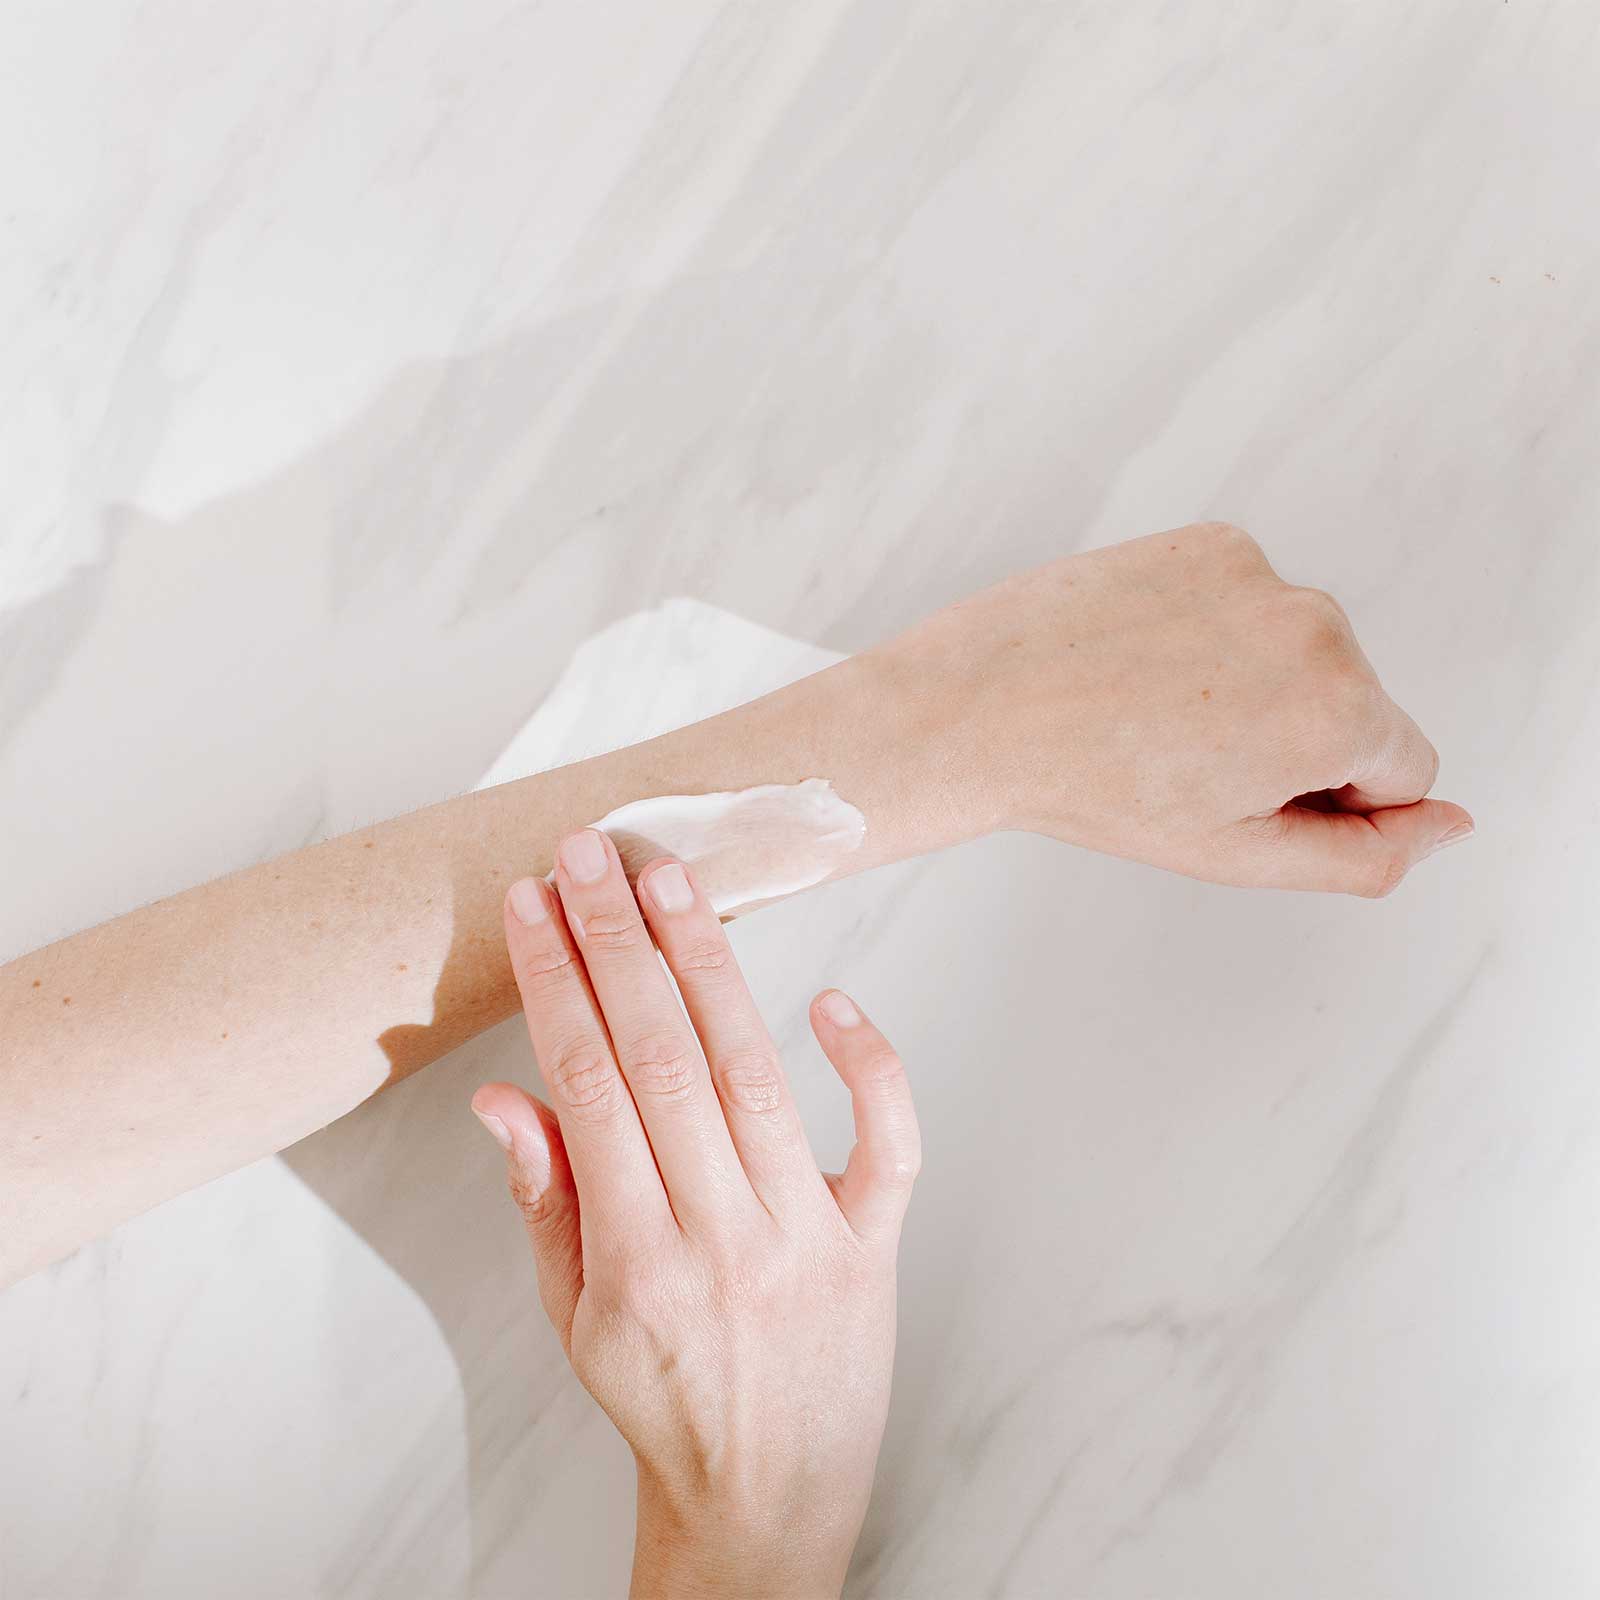 A Girl Applying Cream on her Hand